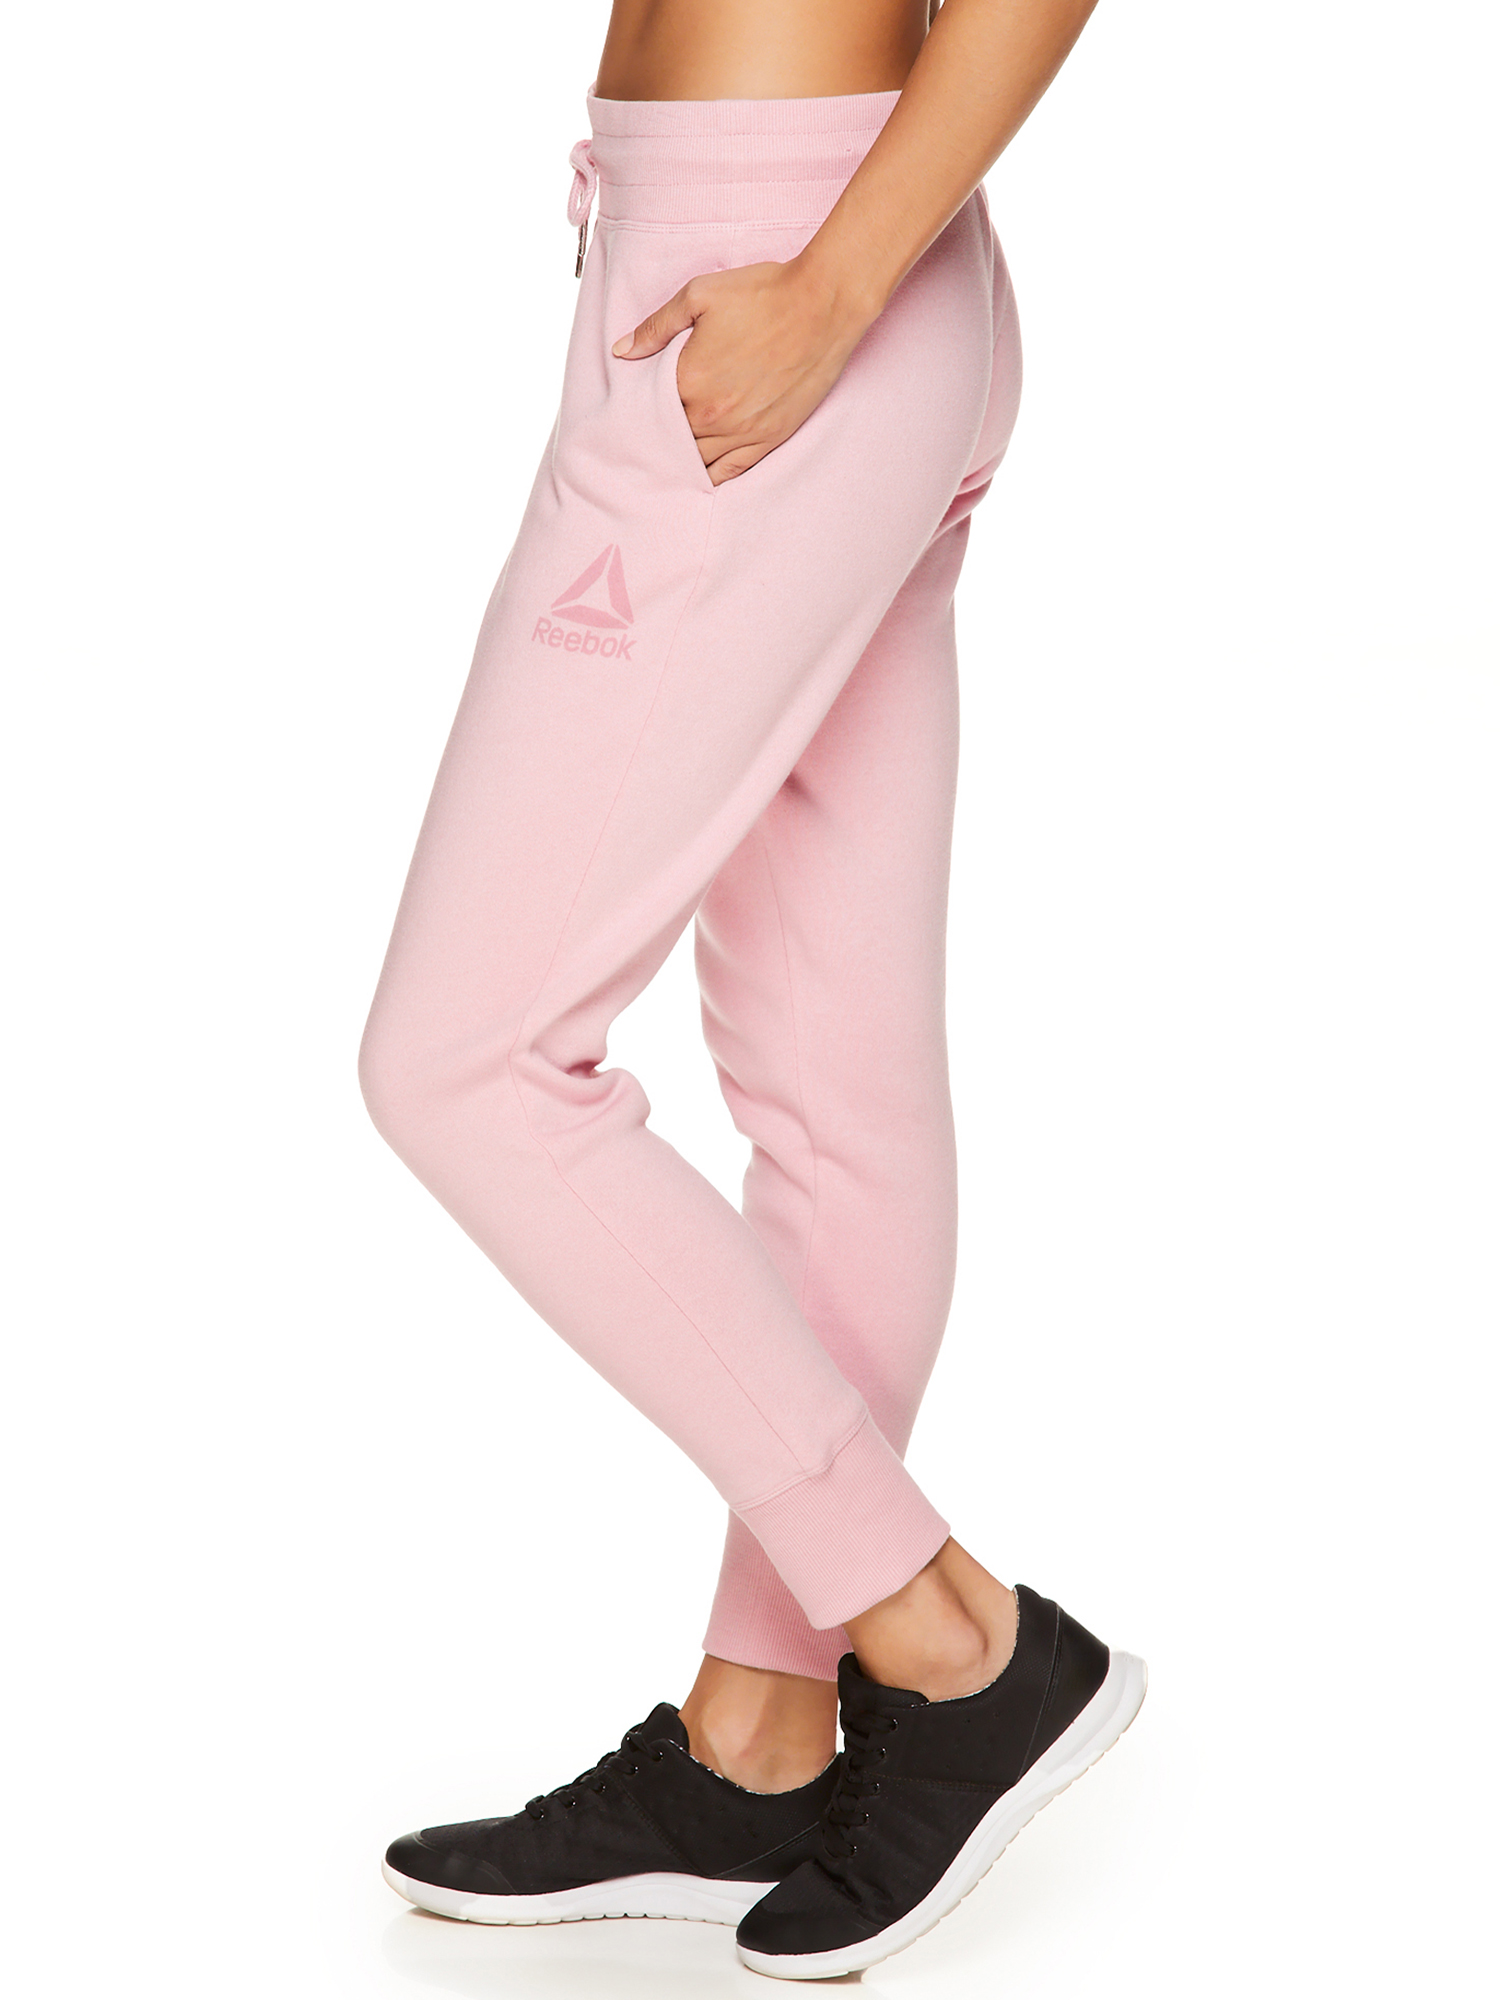 Reebok Womens' Cozy Fleece Jogger Sweatpants with Pockets - image 4 of 4